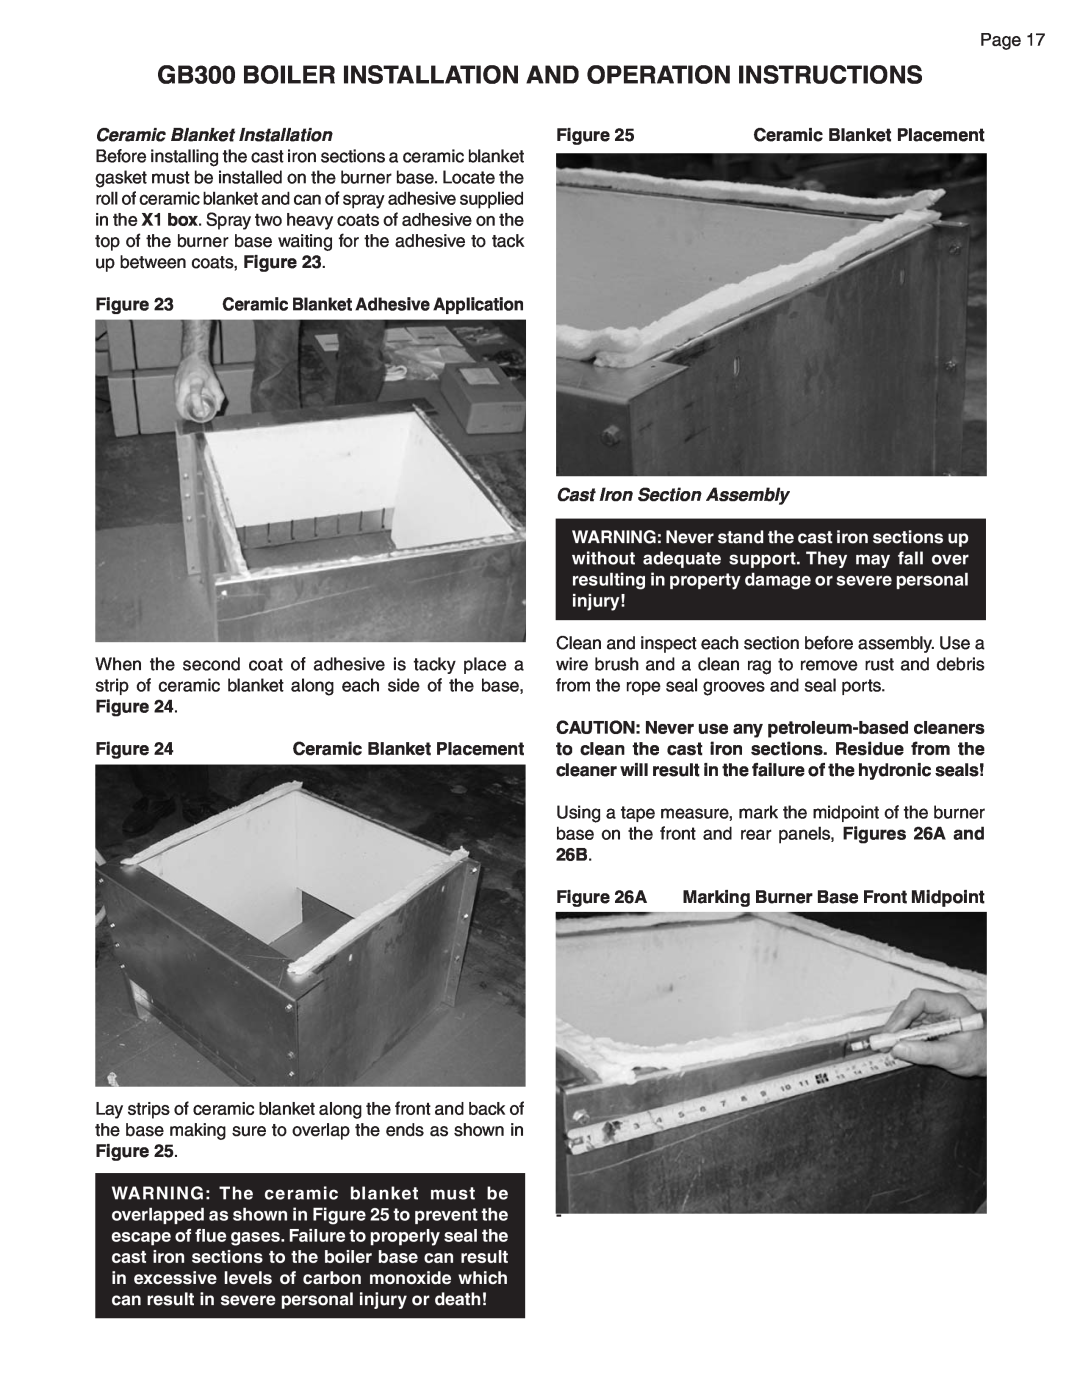 Smith Cast Iron Boilers GB300 warranty Ceramic Blanket Installation, Figure, Ceramic Blanket Adhesive Application 